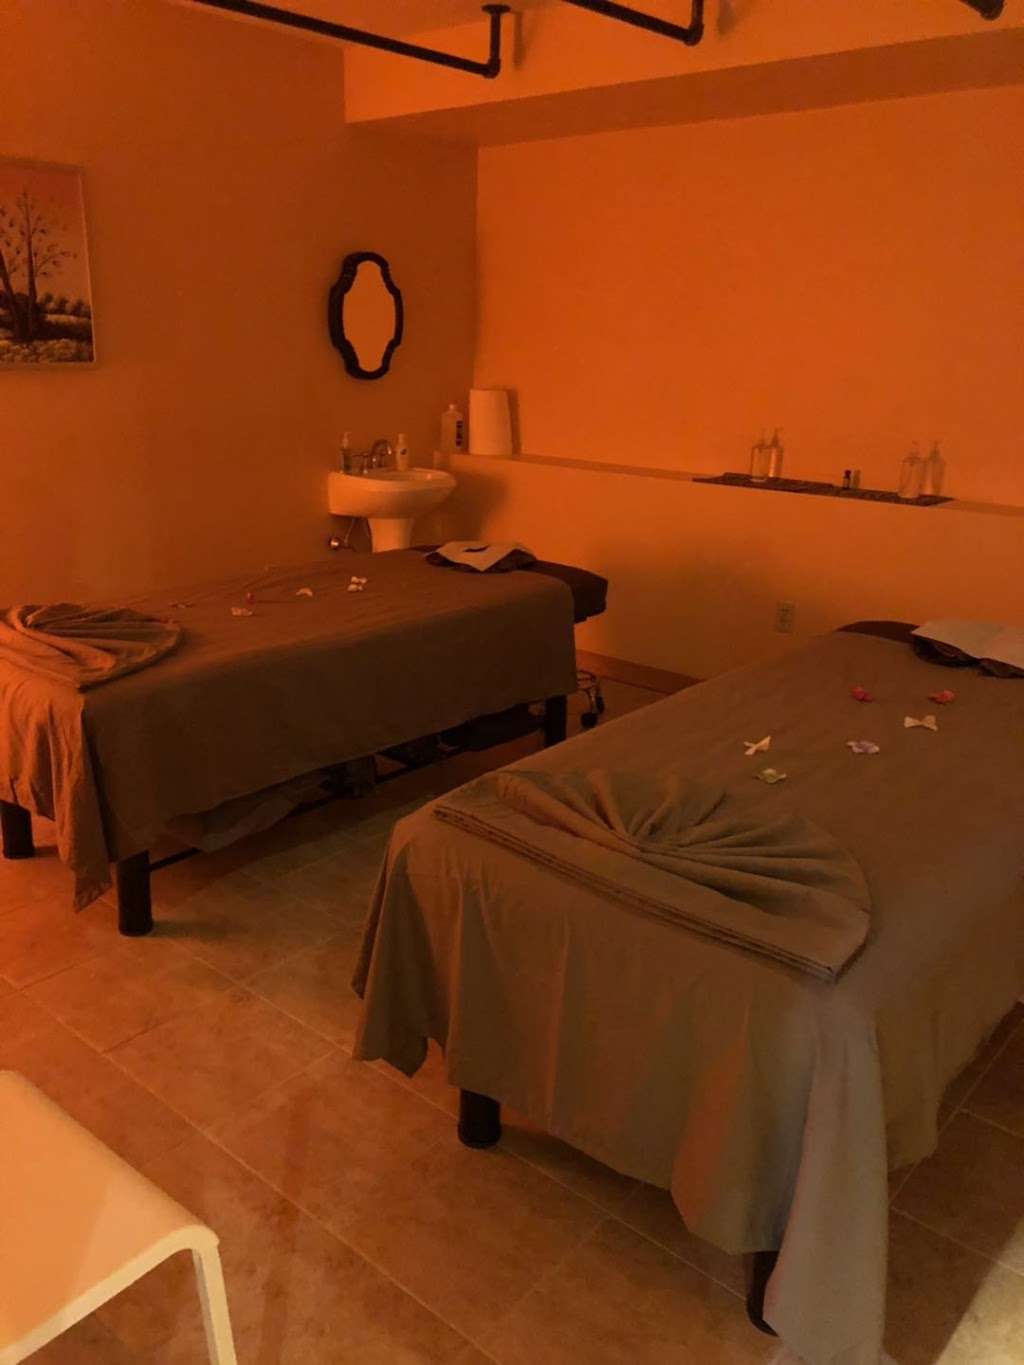 AJ Thai Massage - spa  | Photo 6 of 7 | Address: 129 Central St, Milford, MA 01757, USA | Phone: (508) 530-0707